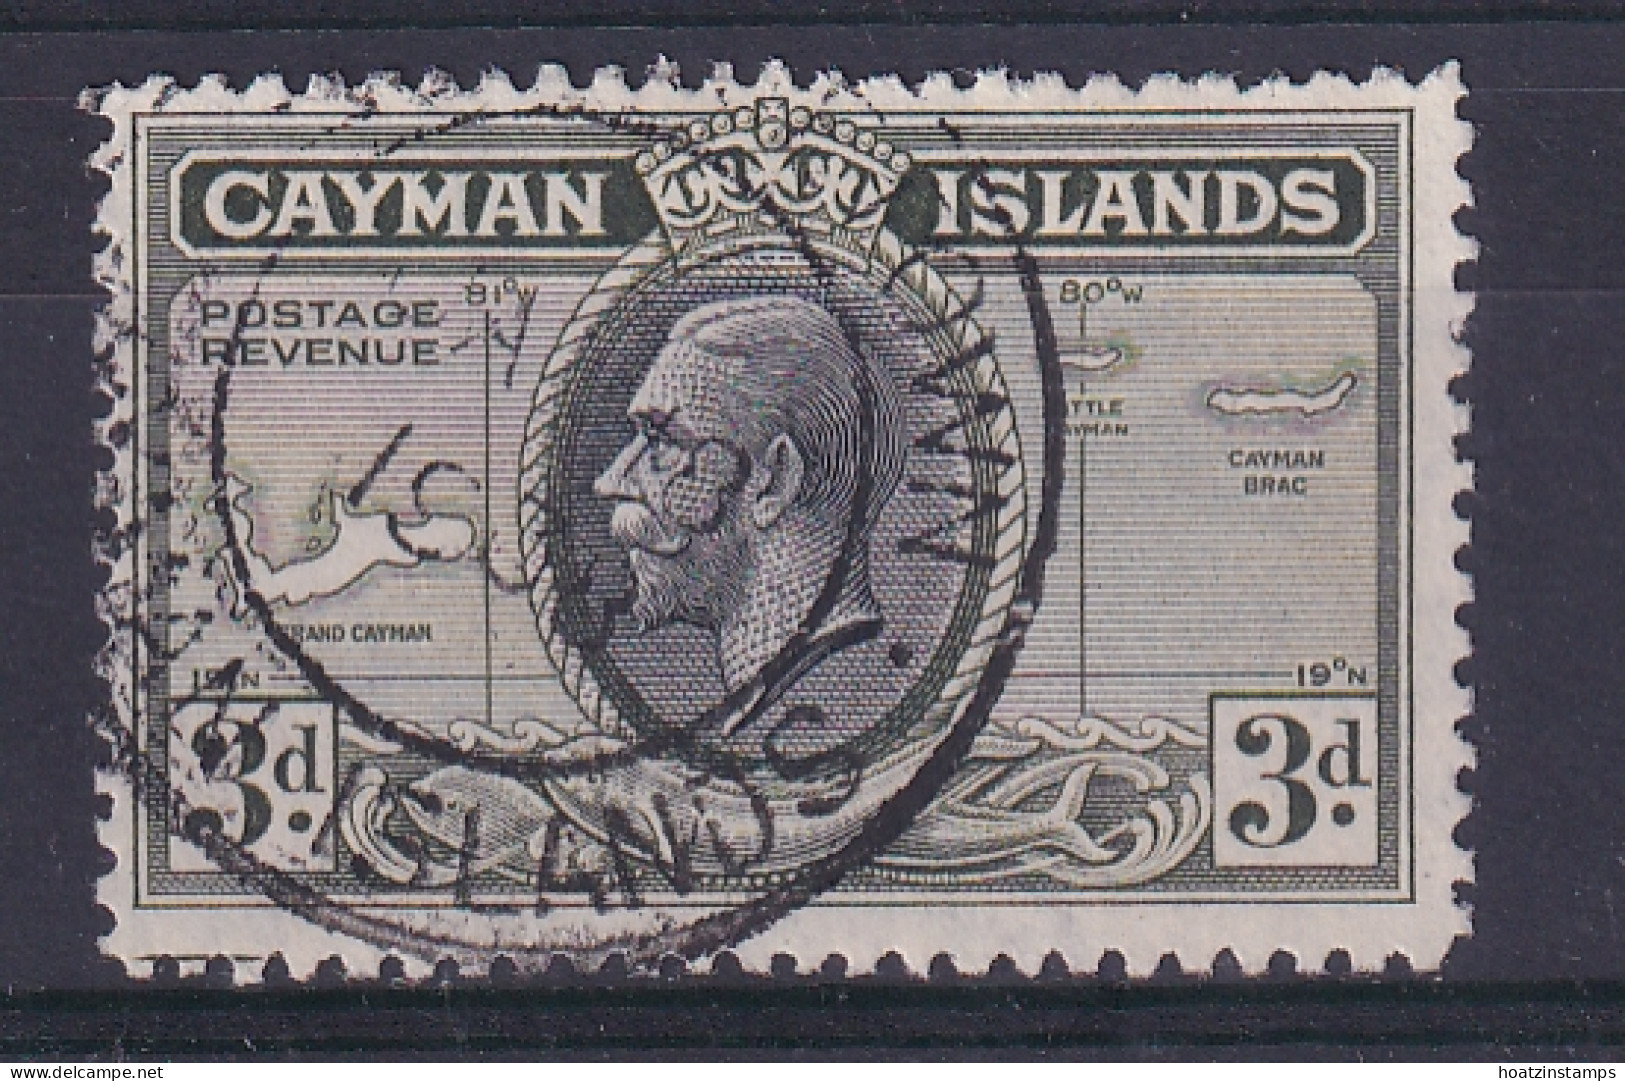 Cayman Islands: 1935   KGV - Pictorial   SG102   3d    Used - Iles Caïmans